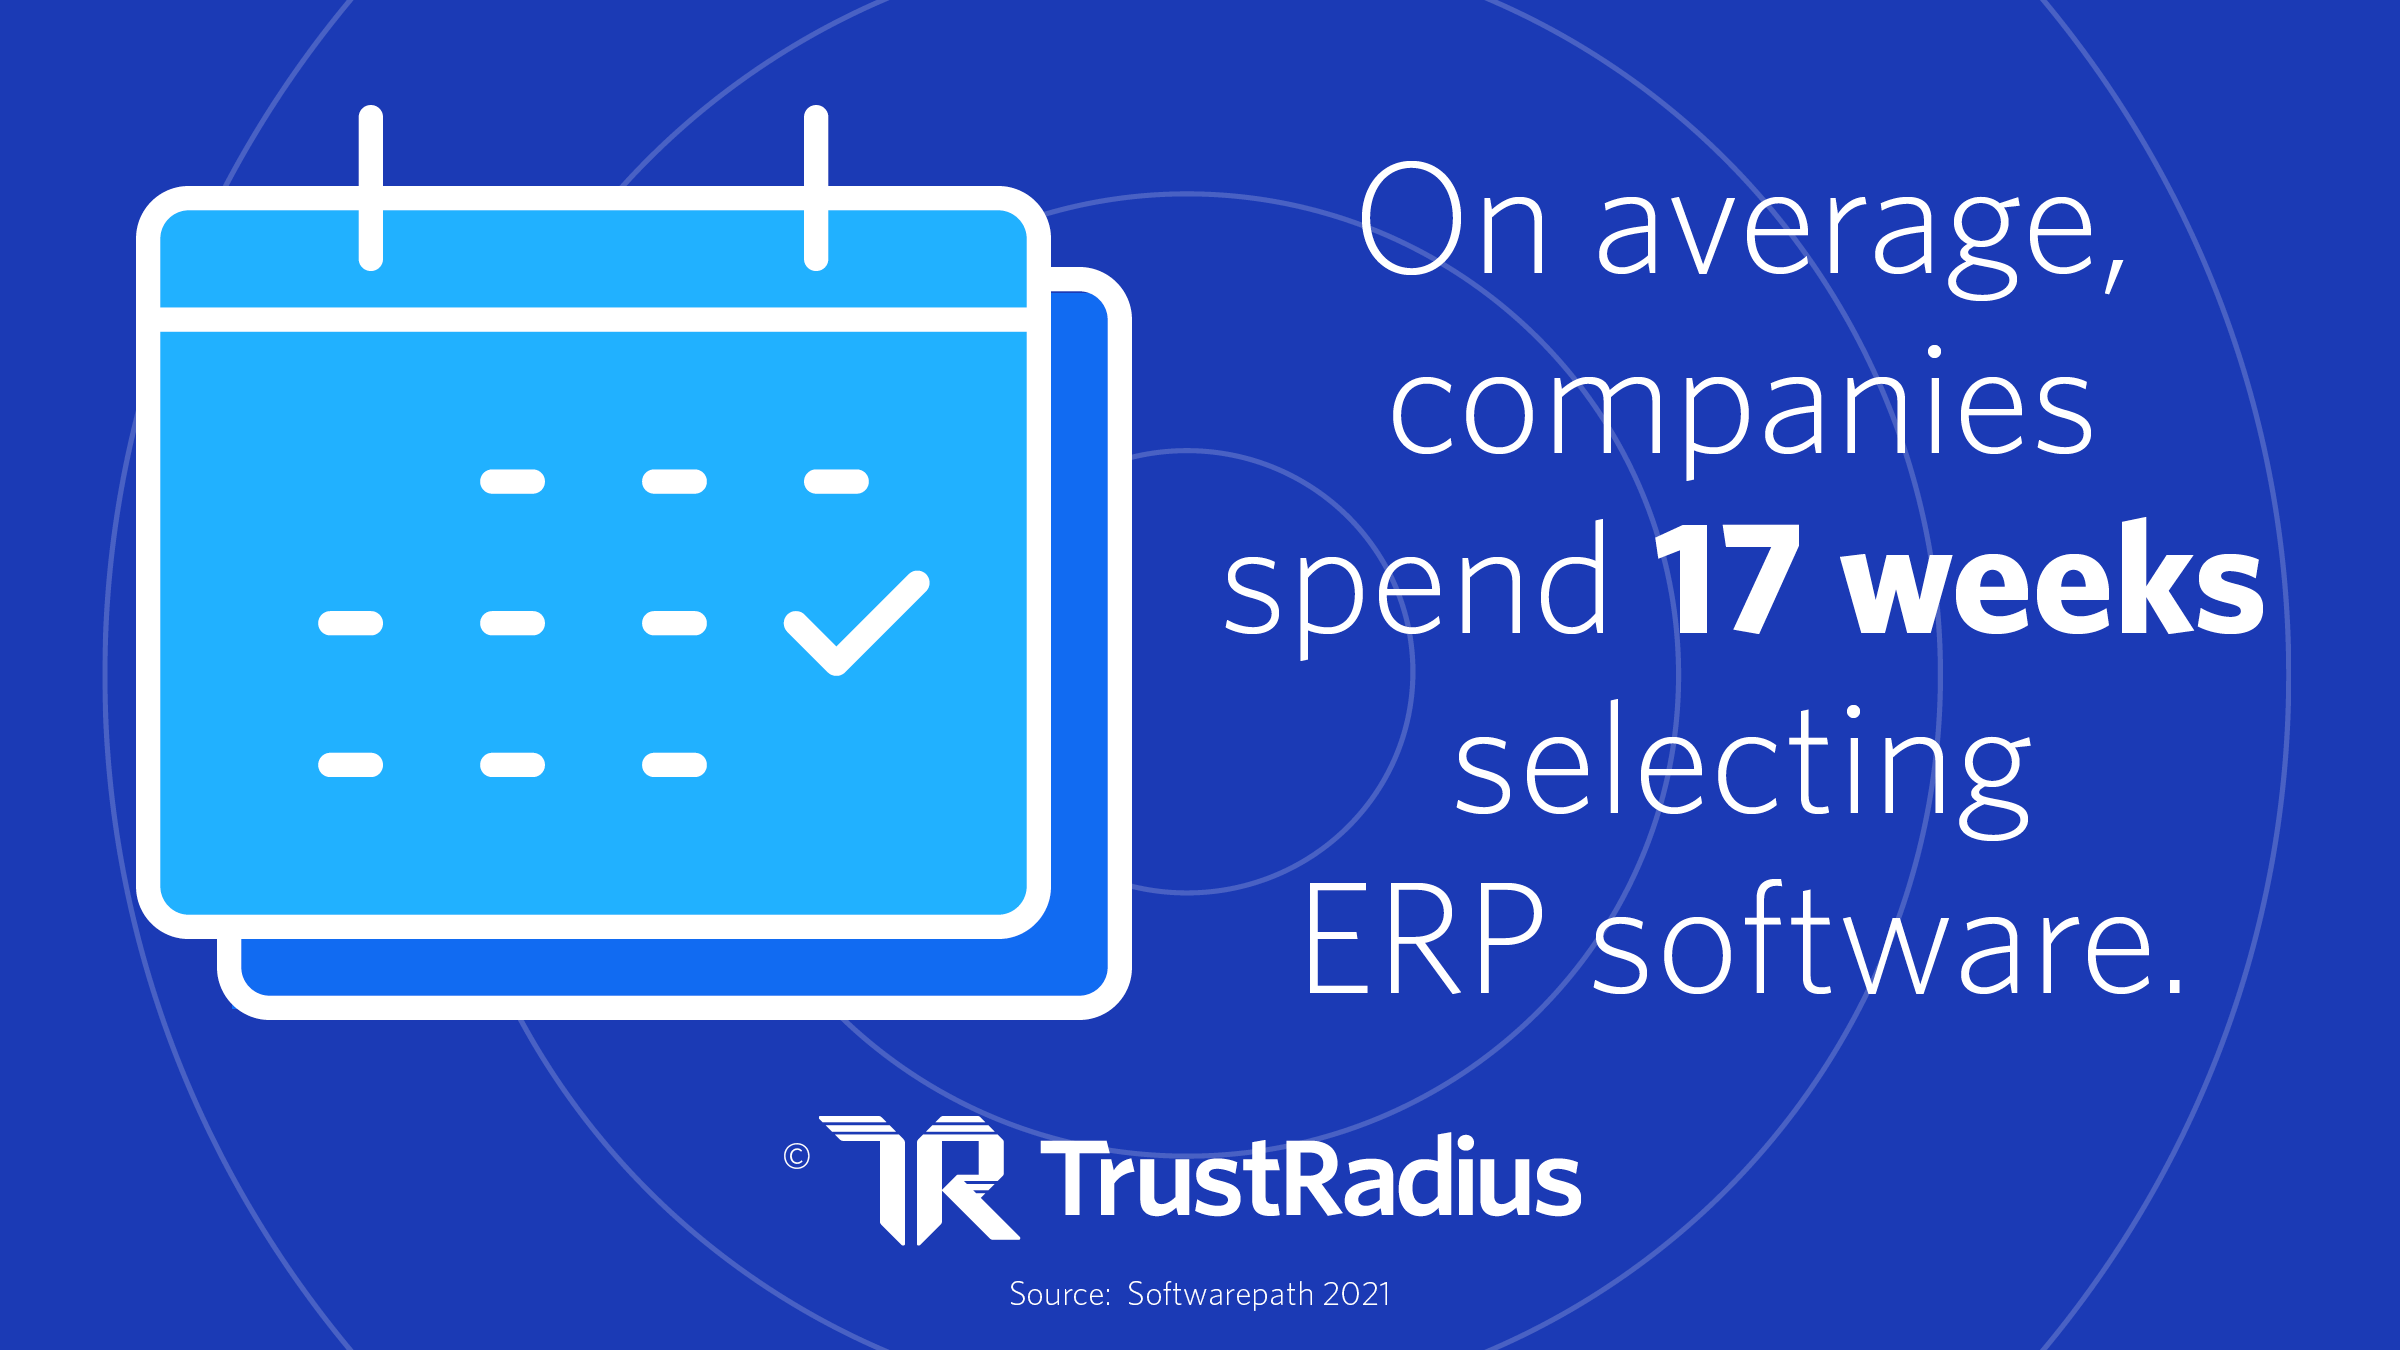 On average, companies spend 17 weeks chosing ERP software